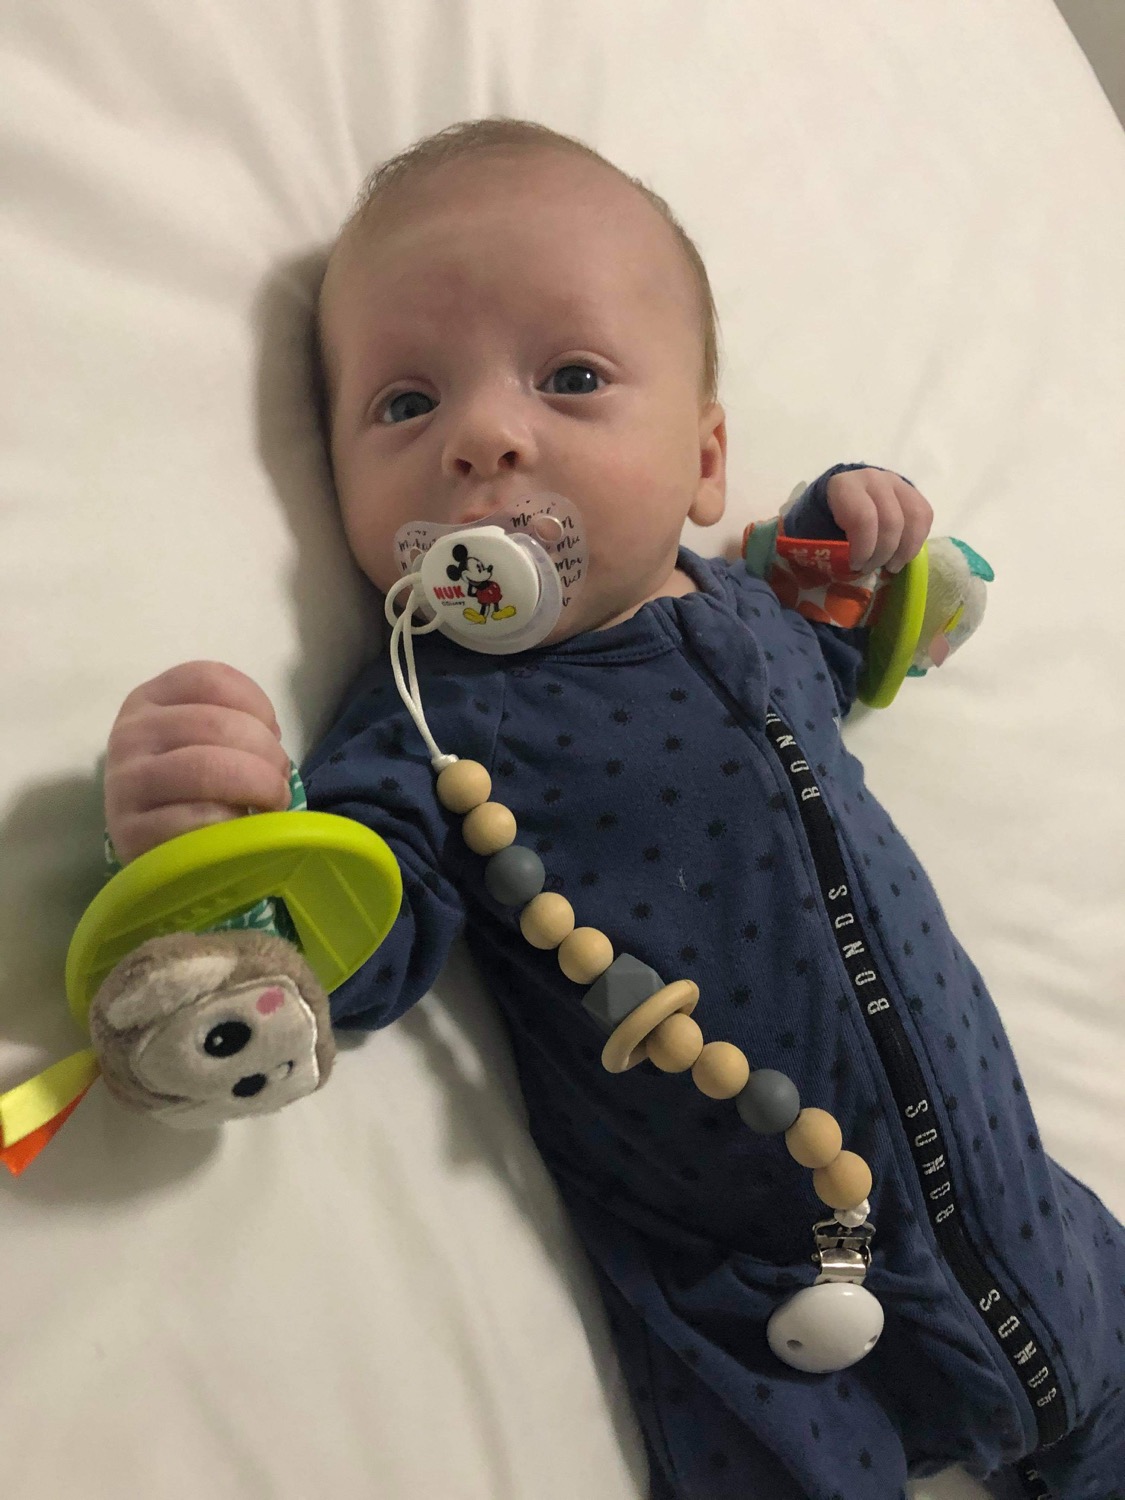 7 week old baby-my birth story